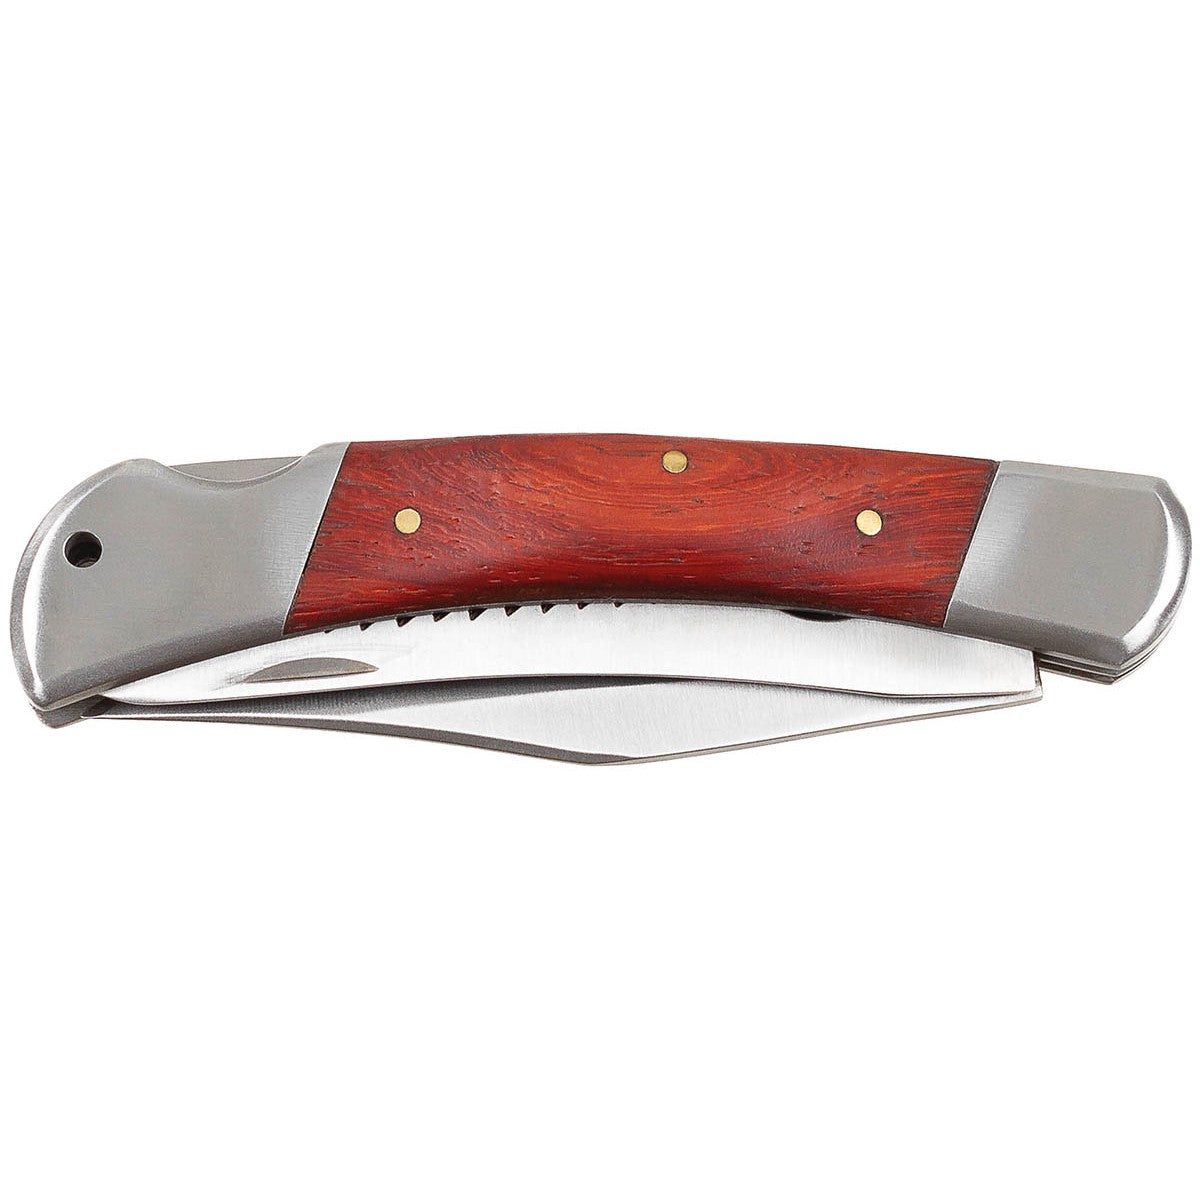 Folding knife, "Hunter", metal handle with wood inlay